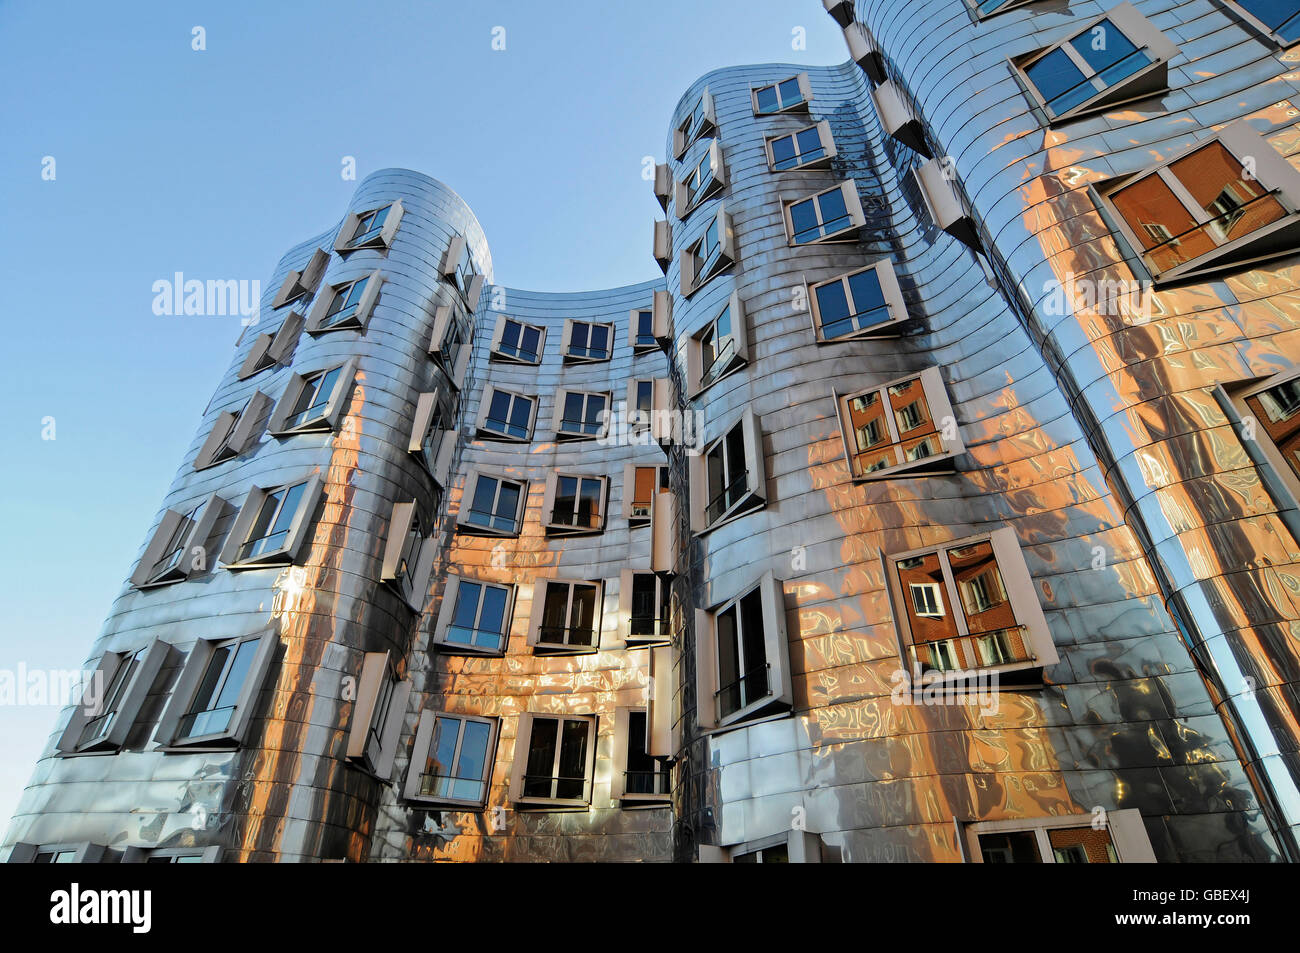 Gehry buildings, architect Frank O. Gehry, Neuer Zollhof, Medienhafen district, Duesseldorf, North Rhine-Westphalia, Germany / Düsseldorf Stock Photo